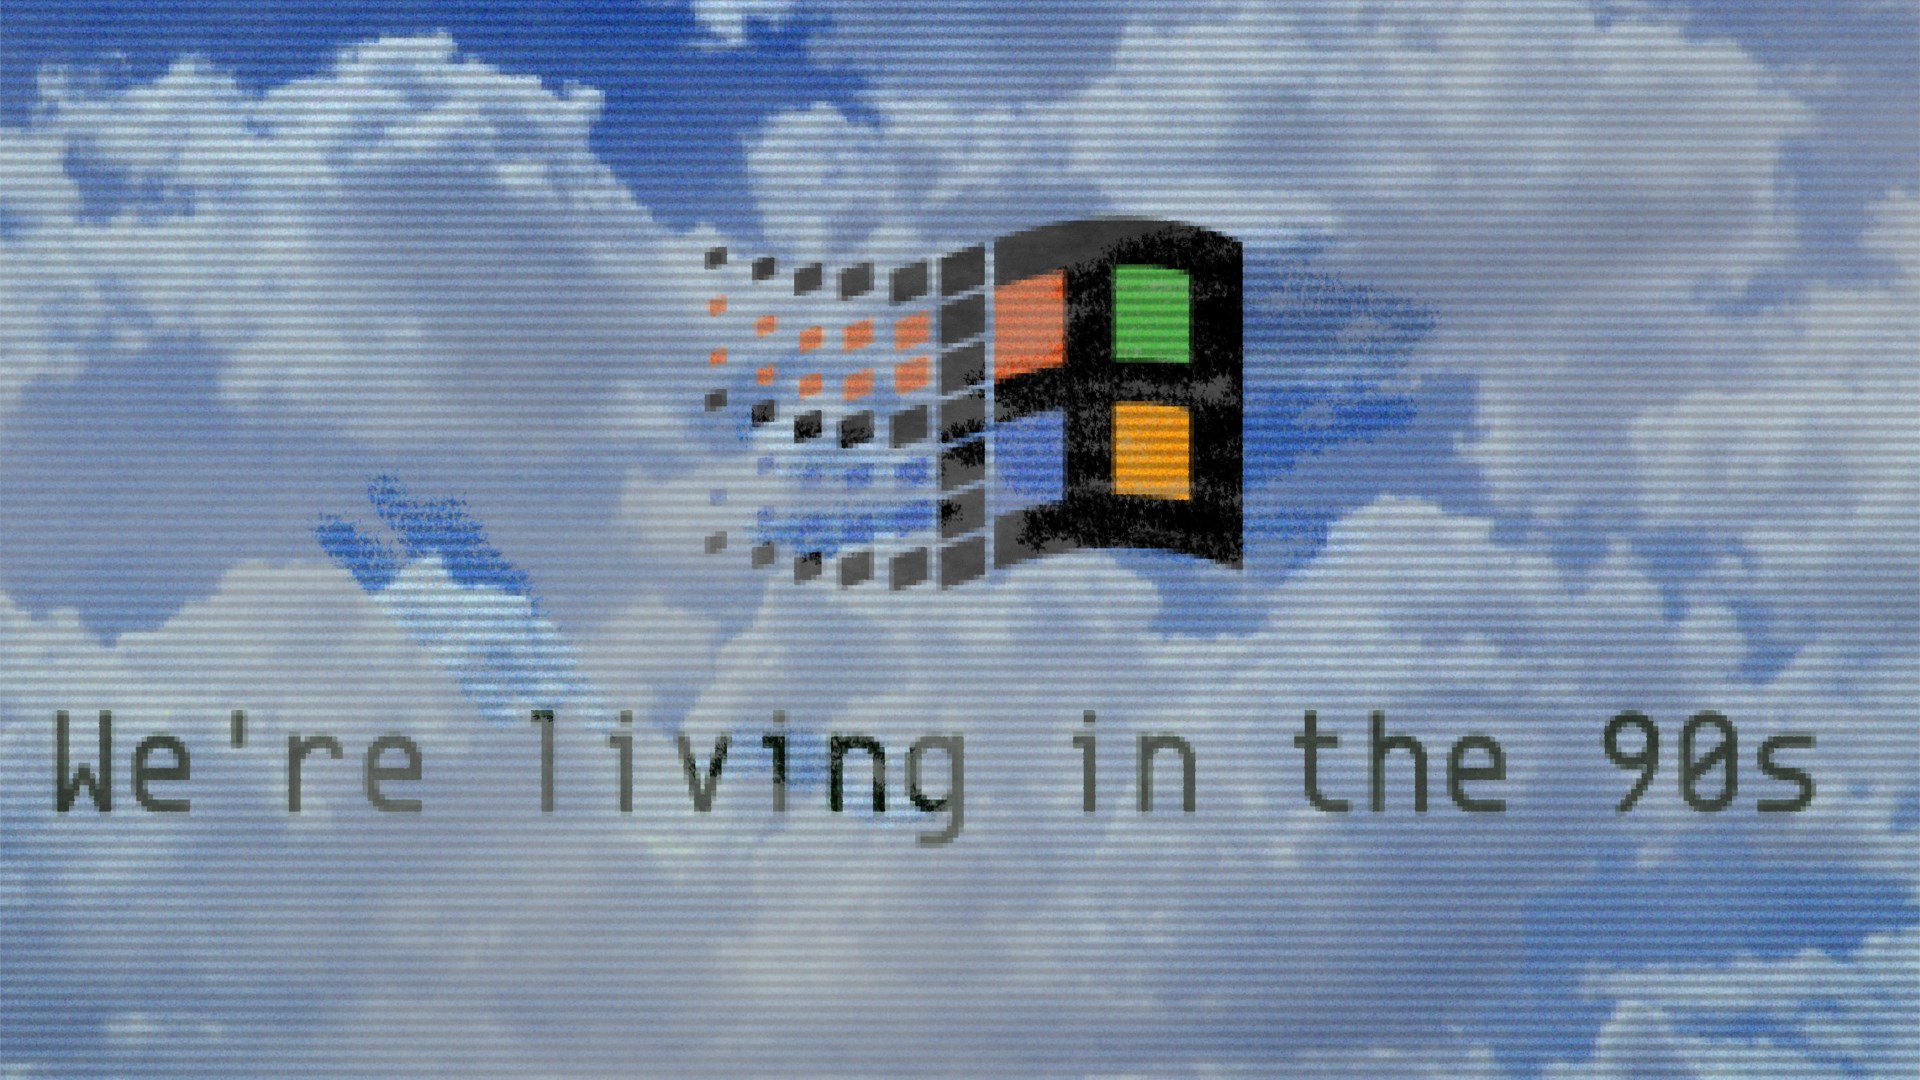 Vaporwave 1990s Microsoft Windows 95 Windows 98 Clouds Humor Typography Blue 1920x1080